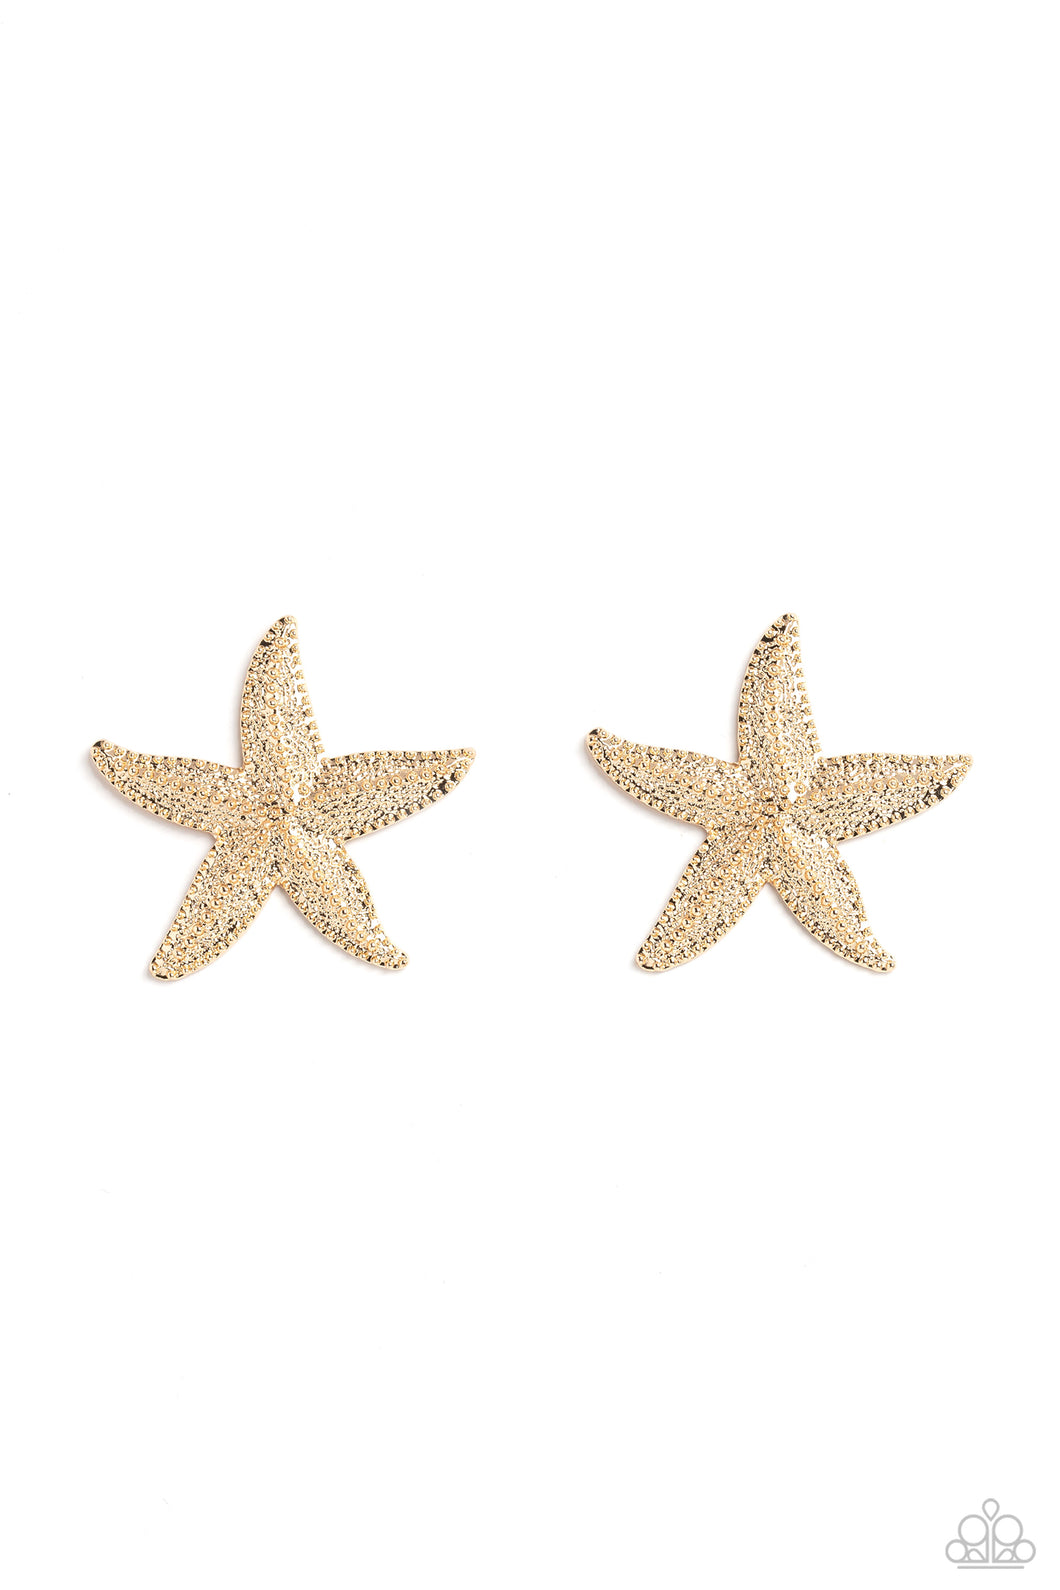 oak-sisters-jewelry-starfish-season-gold-post earrings-paparazzi-accessories-by-lisa